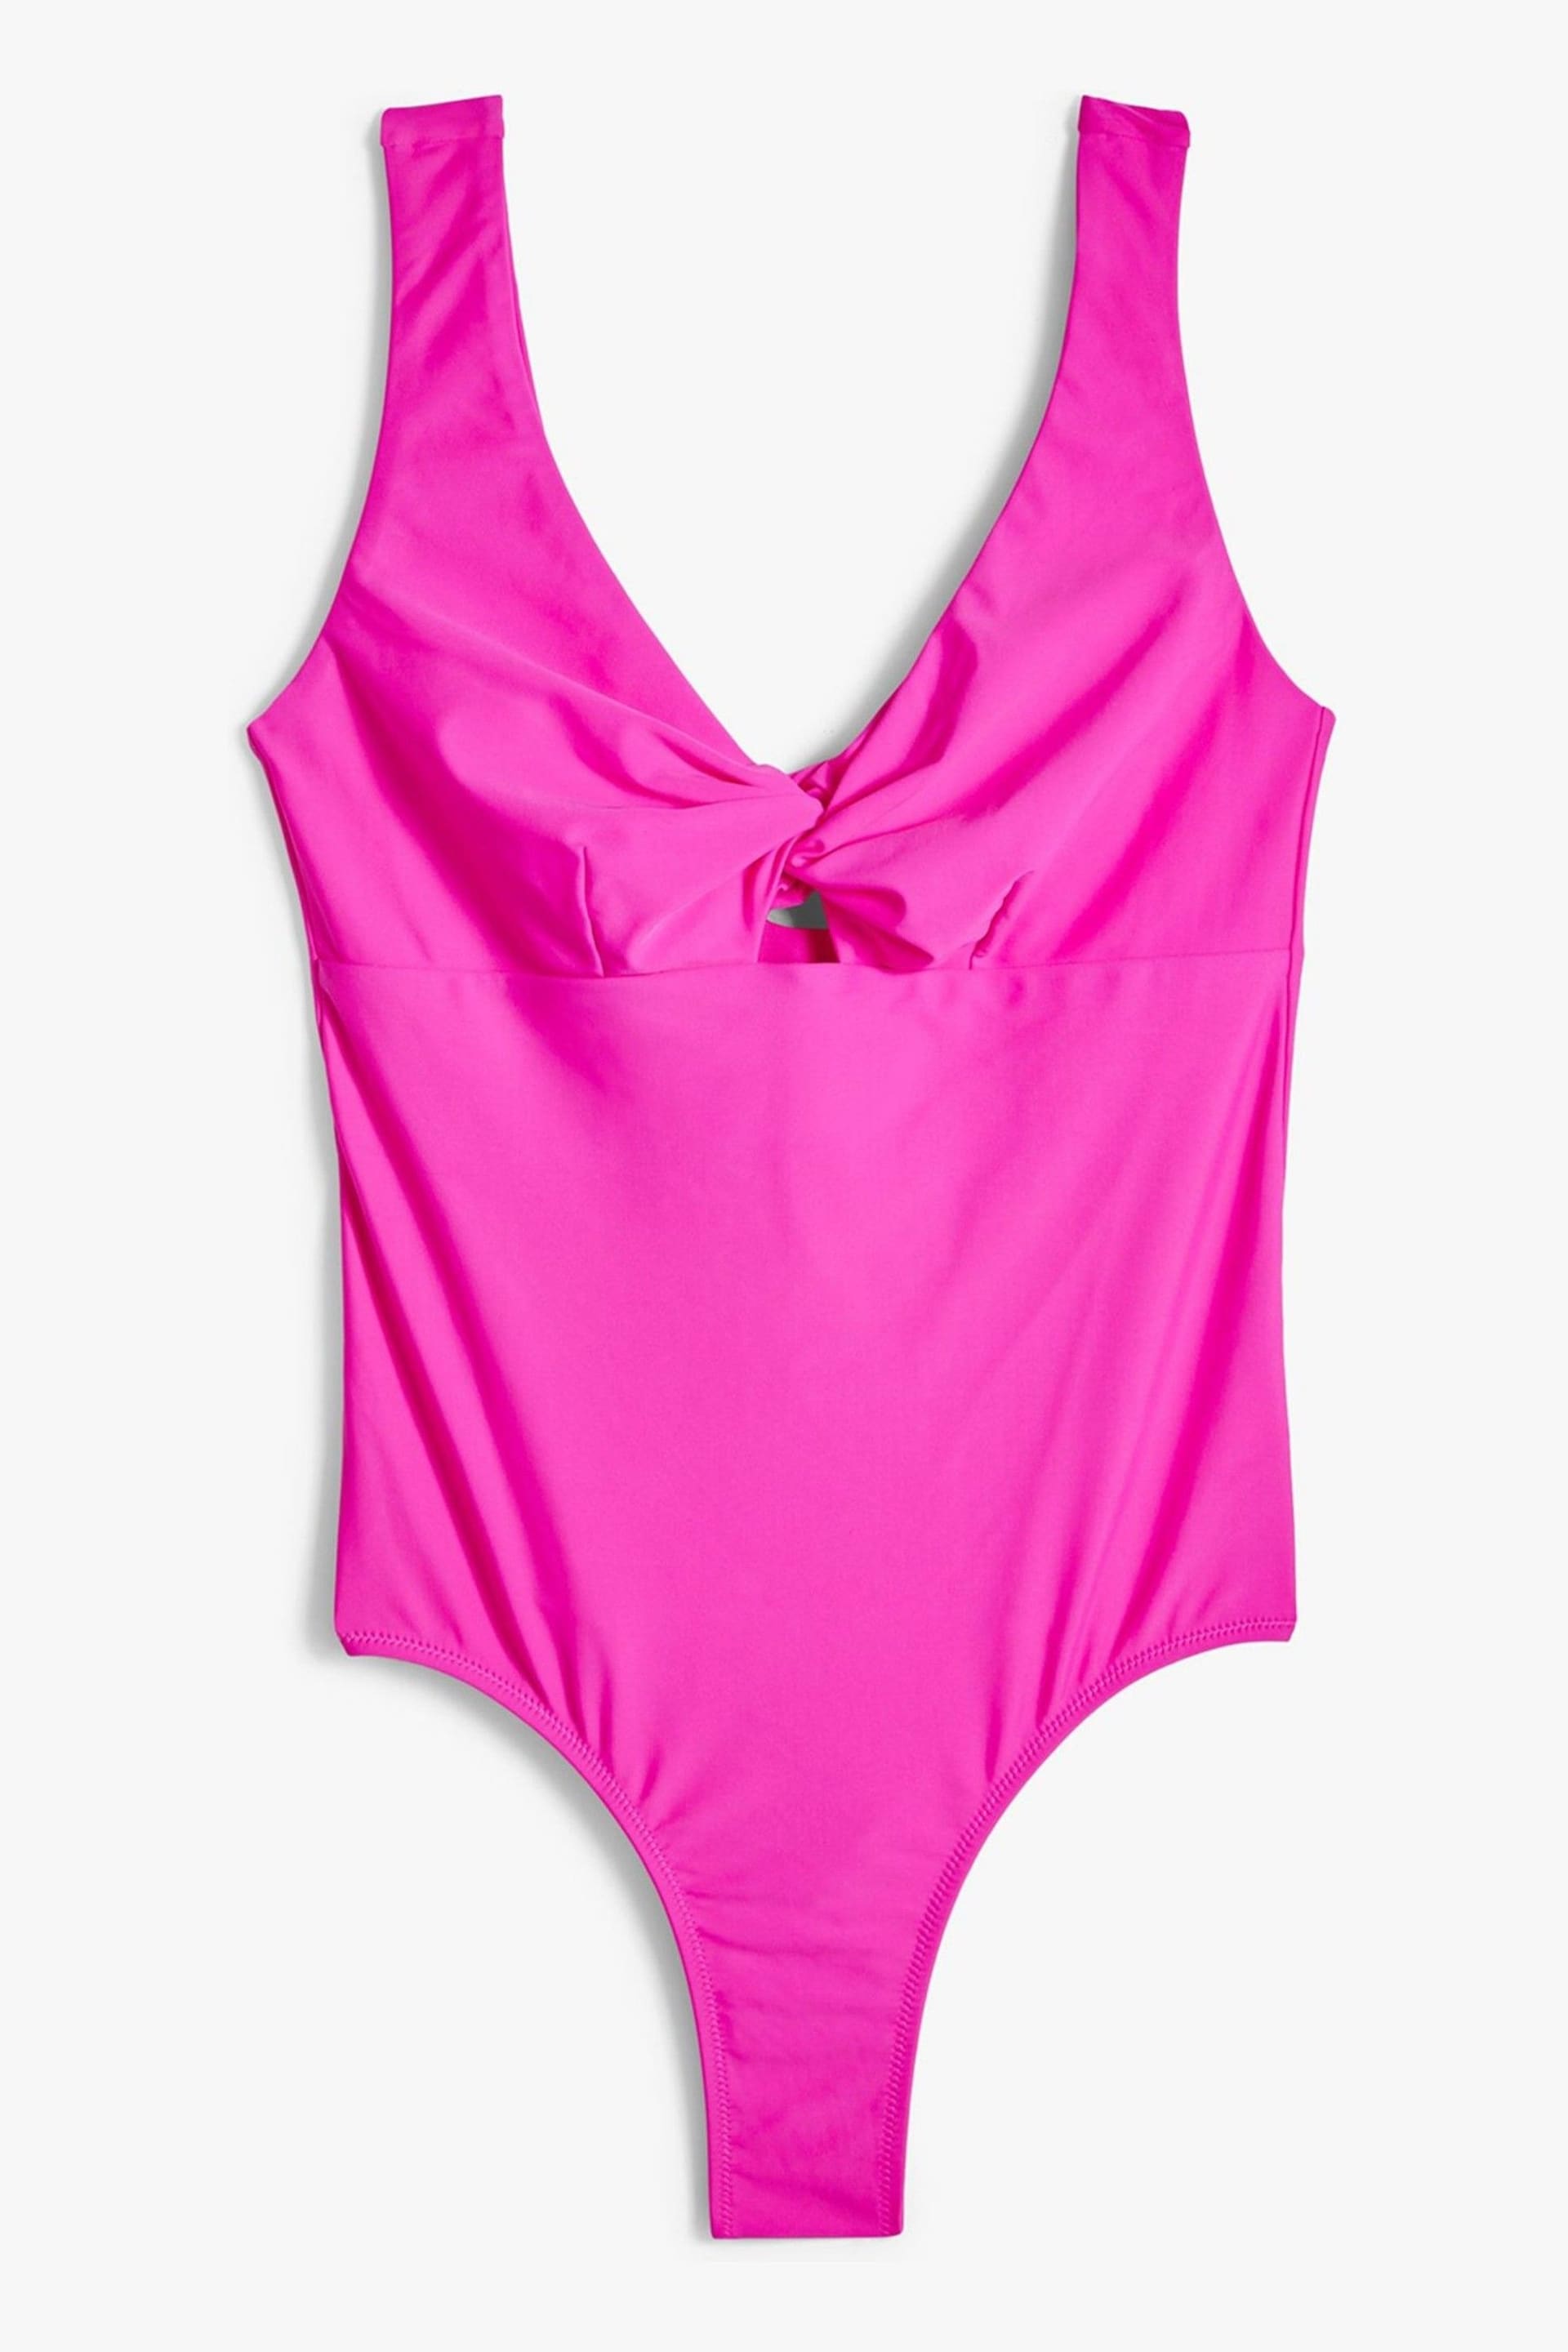 Hush Pink Tara Twist Front Swimsuit - Image 4 of 4